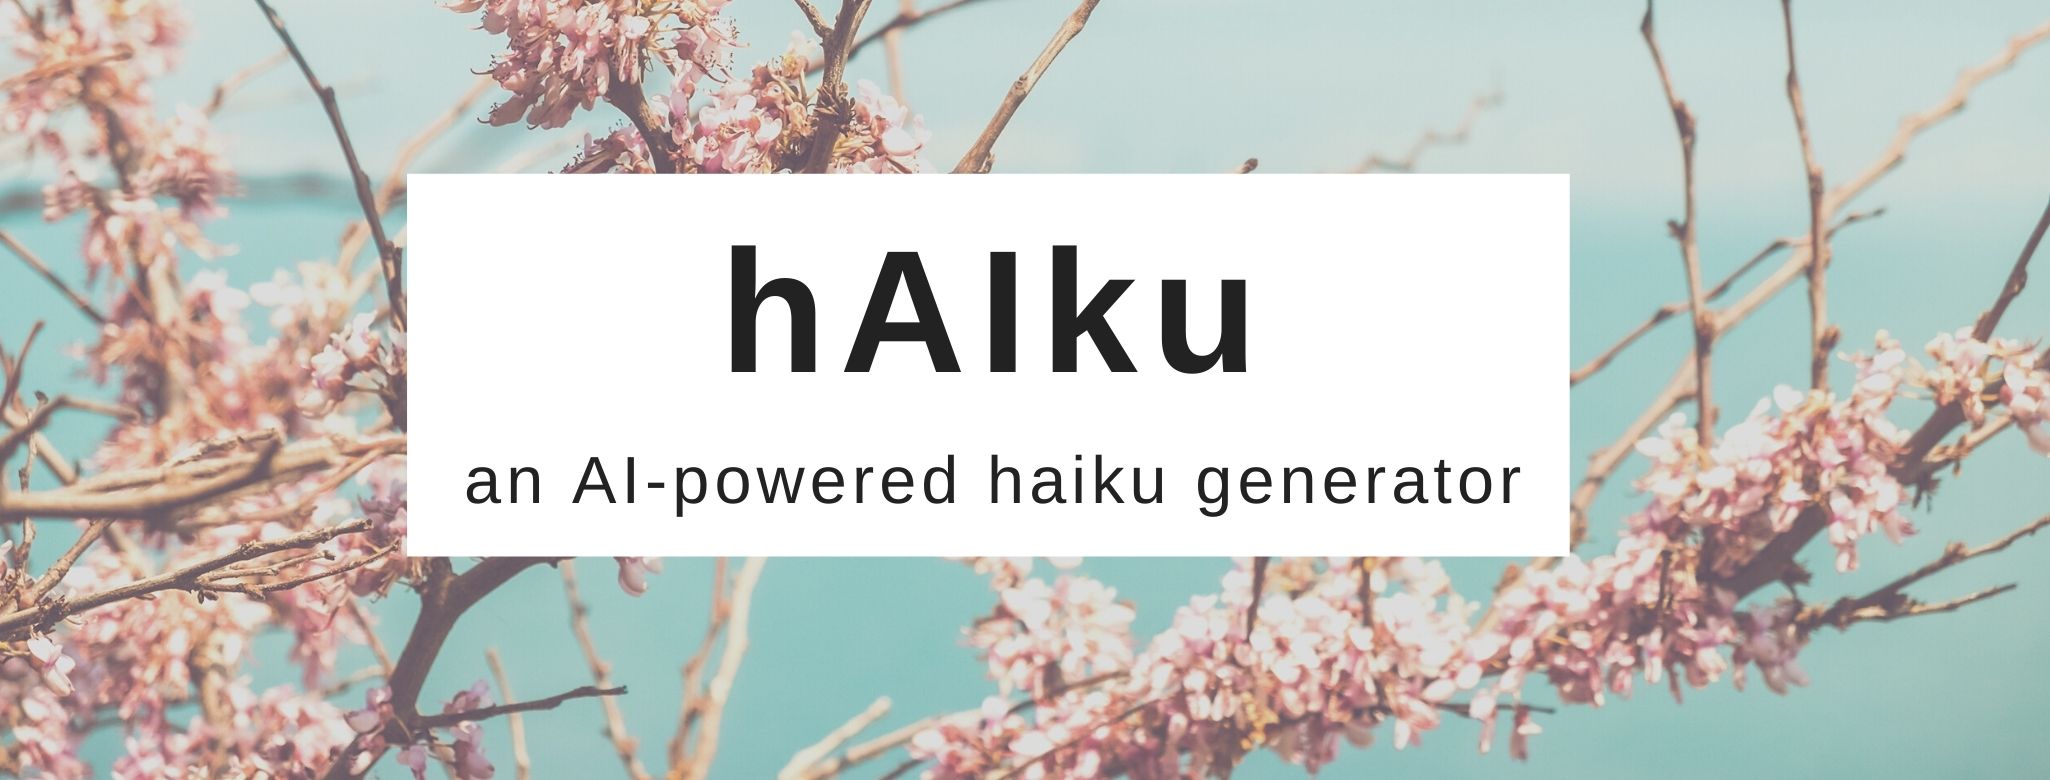 creating-a-haiku-generator-with-python-irati-hurtado